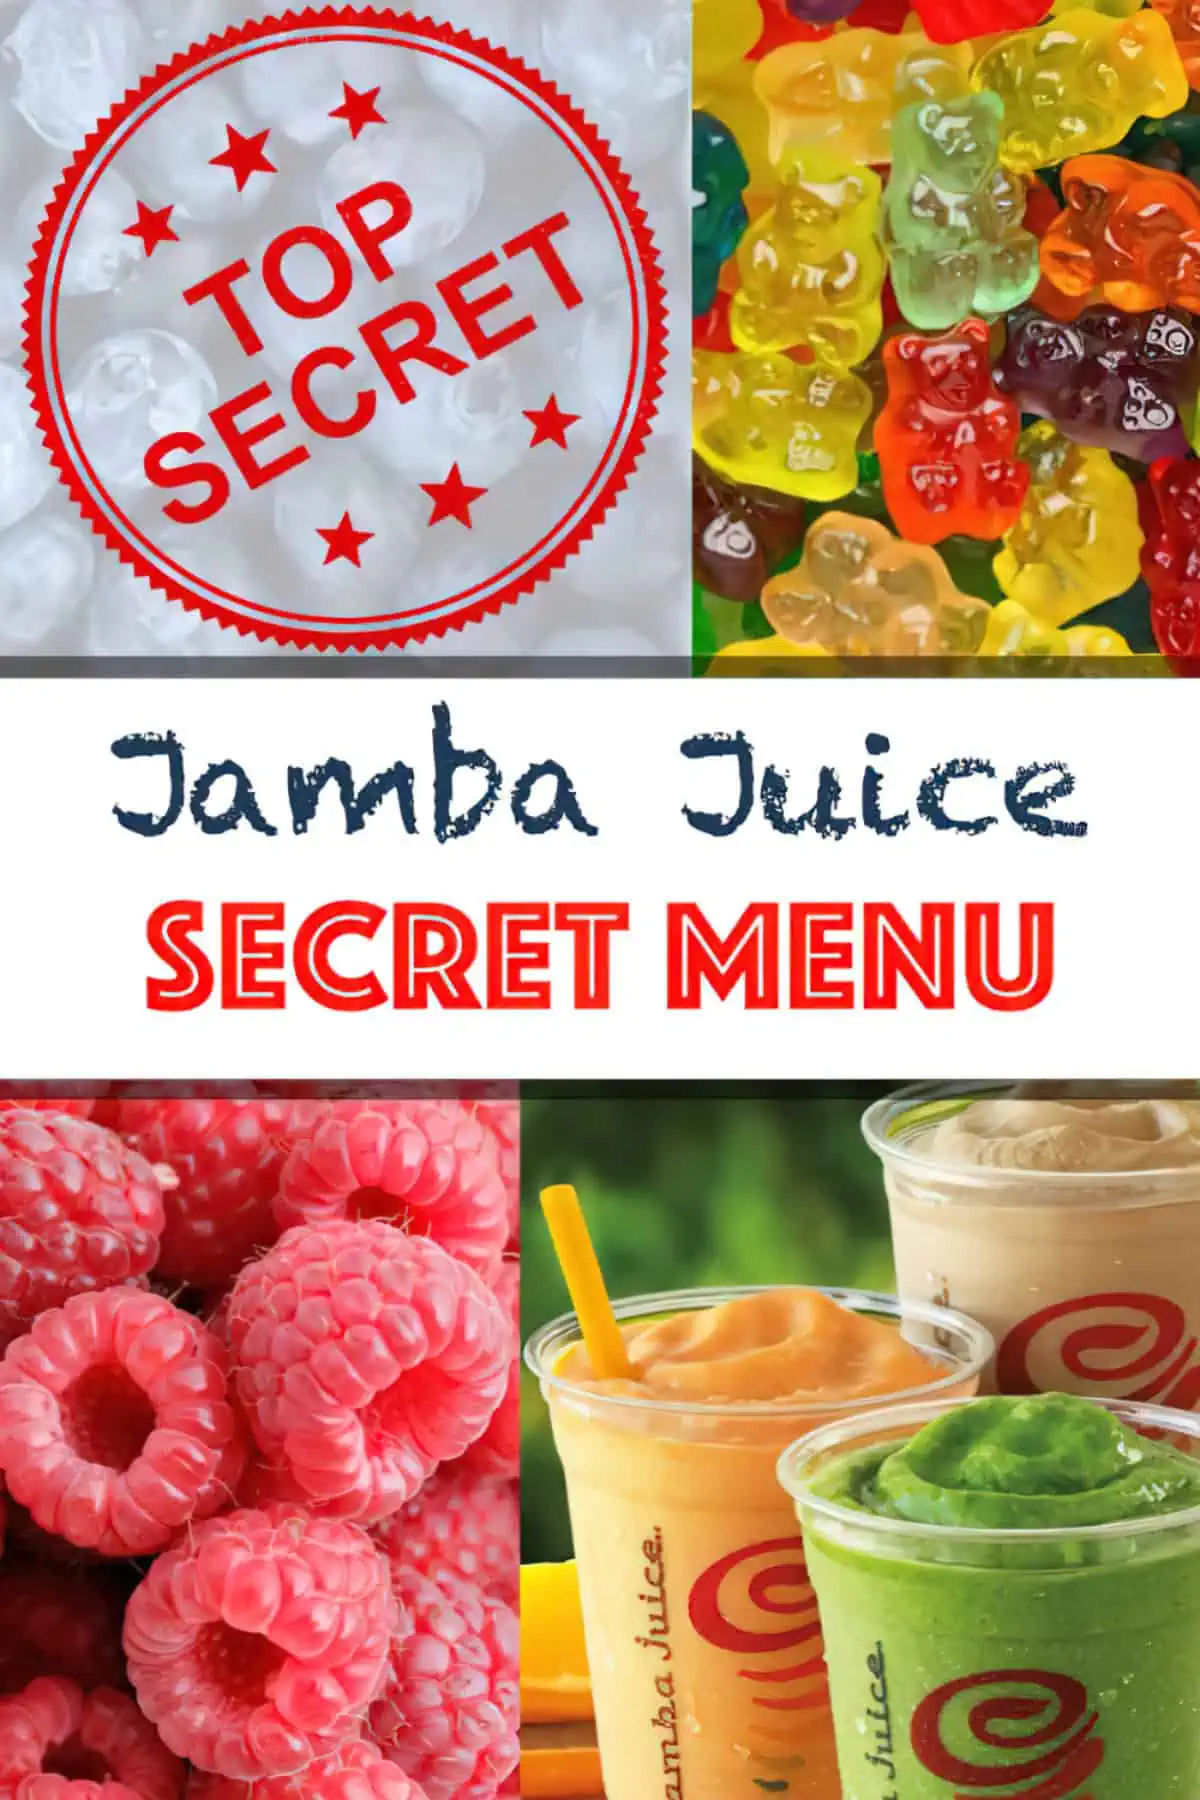 Jamba Juice Secret Menu Smoothie Recipes